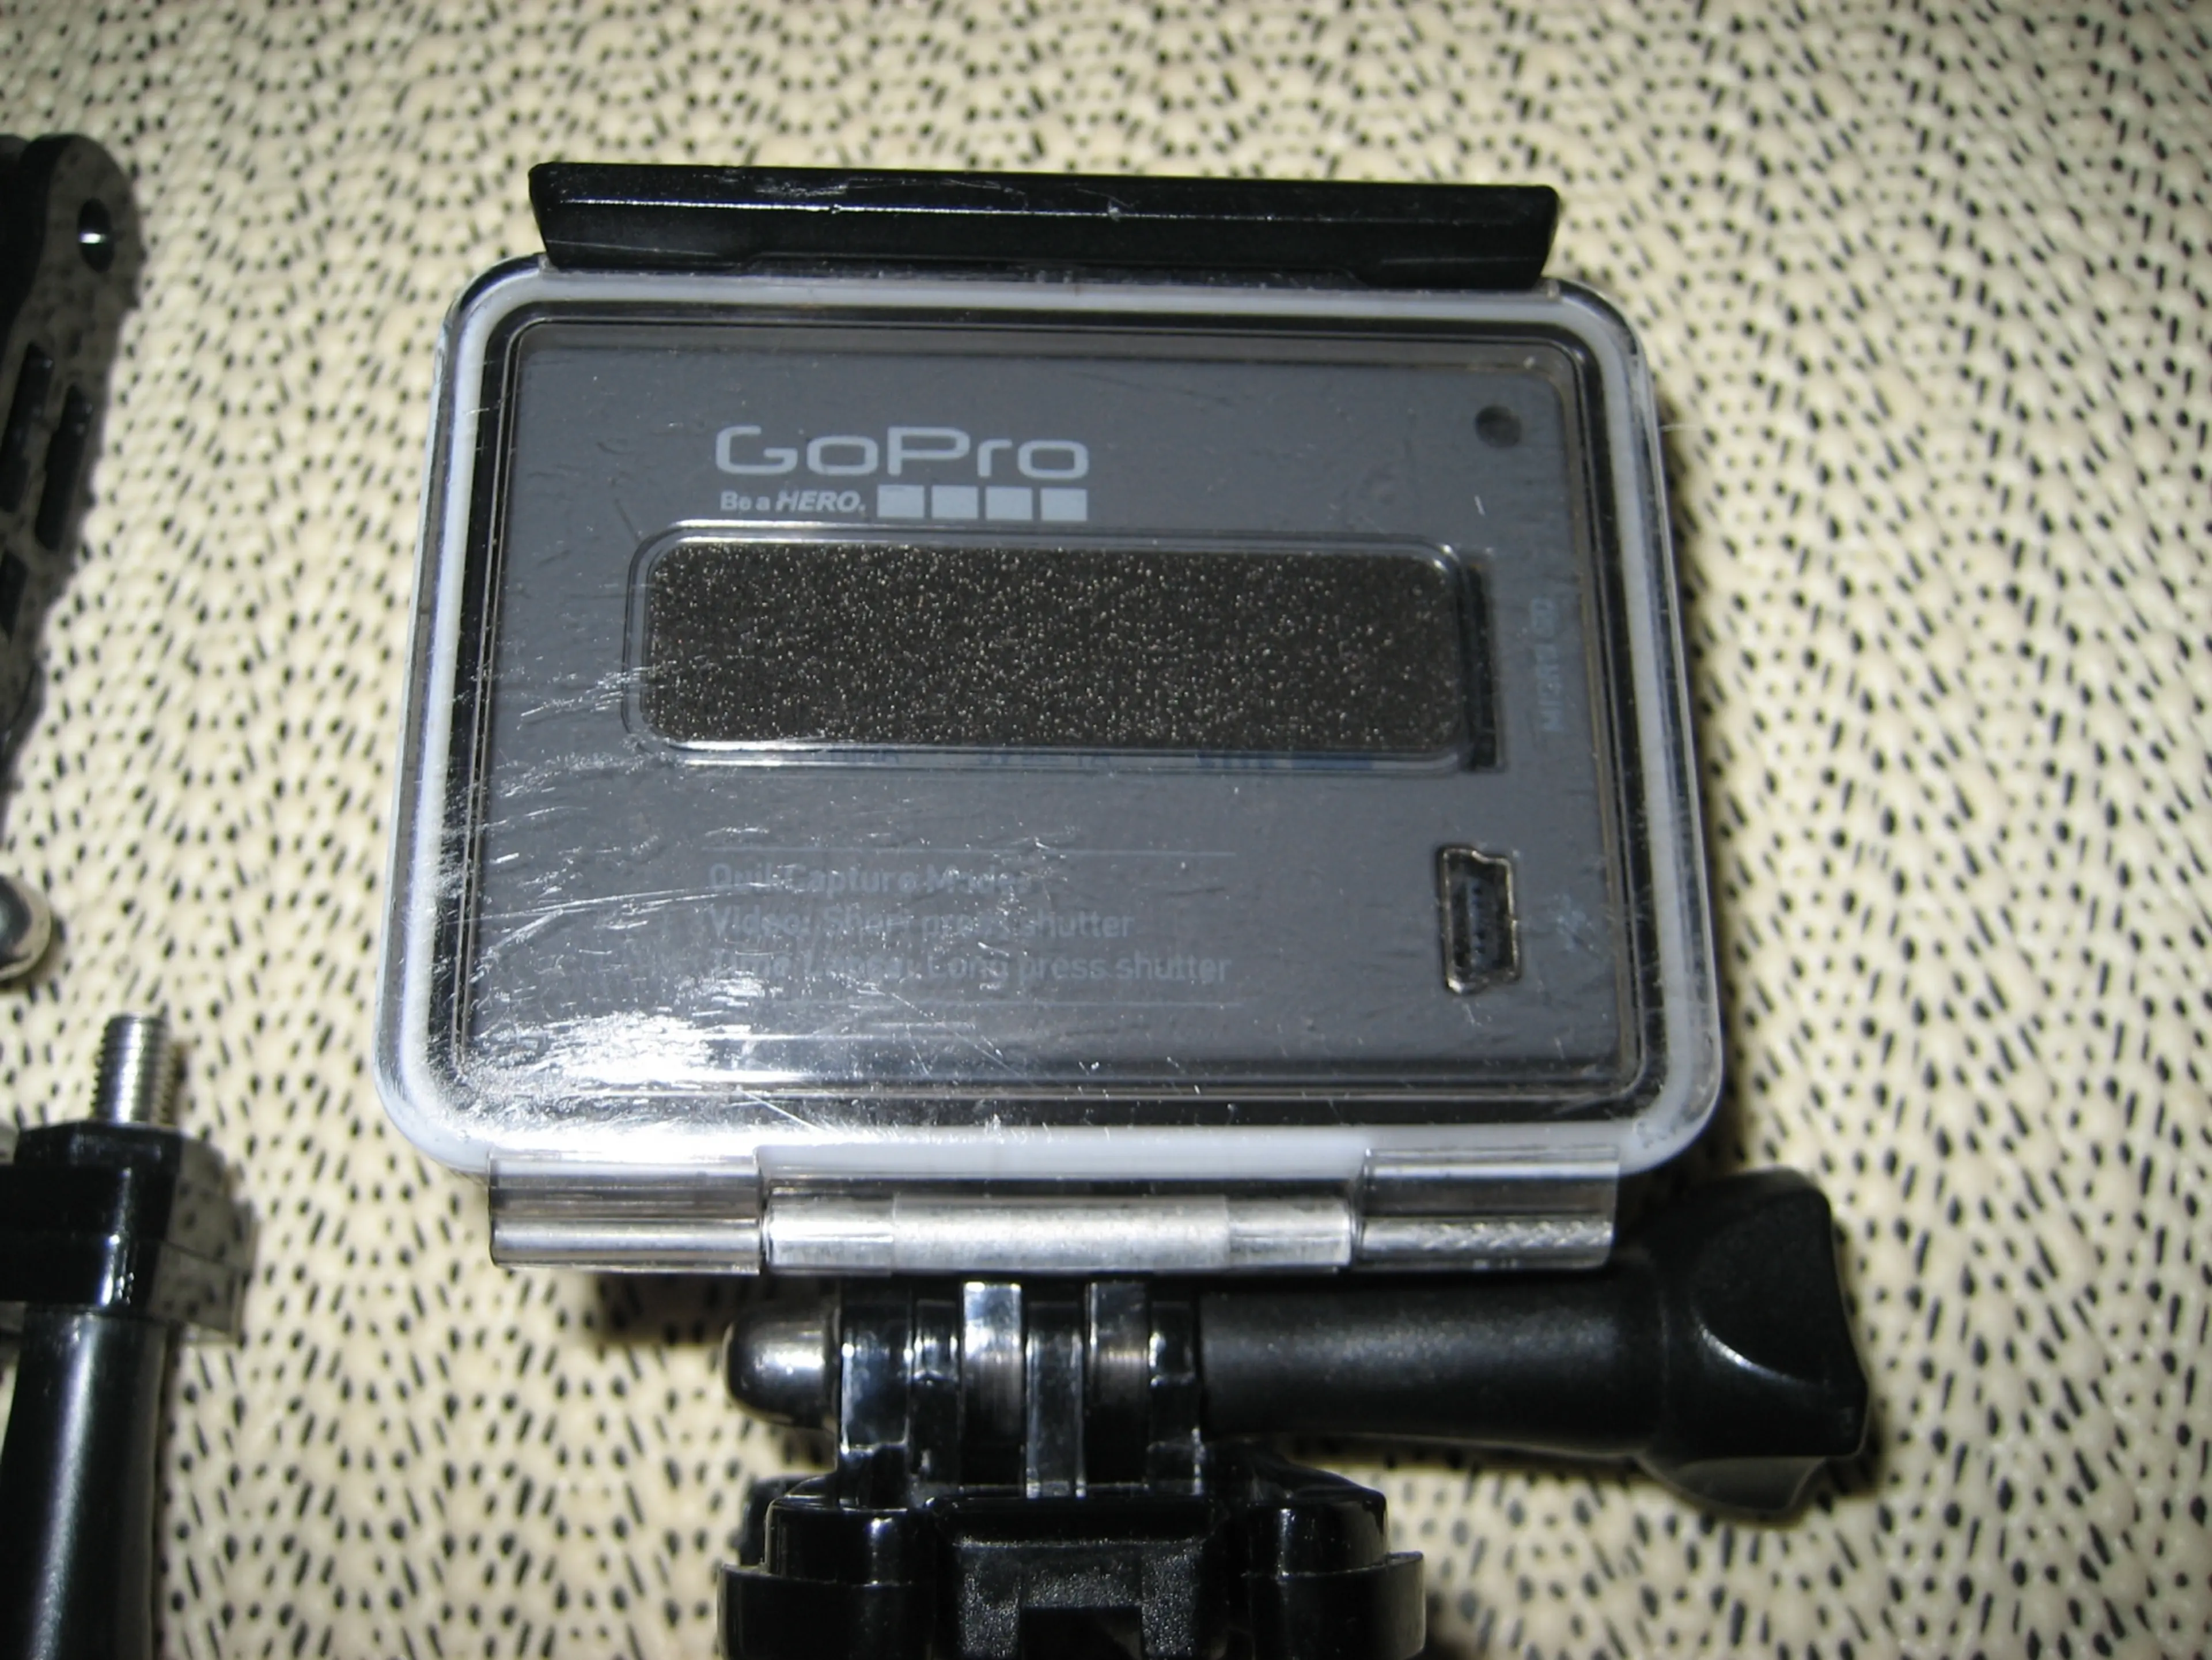 2. Camera actiune GoPro Hero ( model 2014)